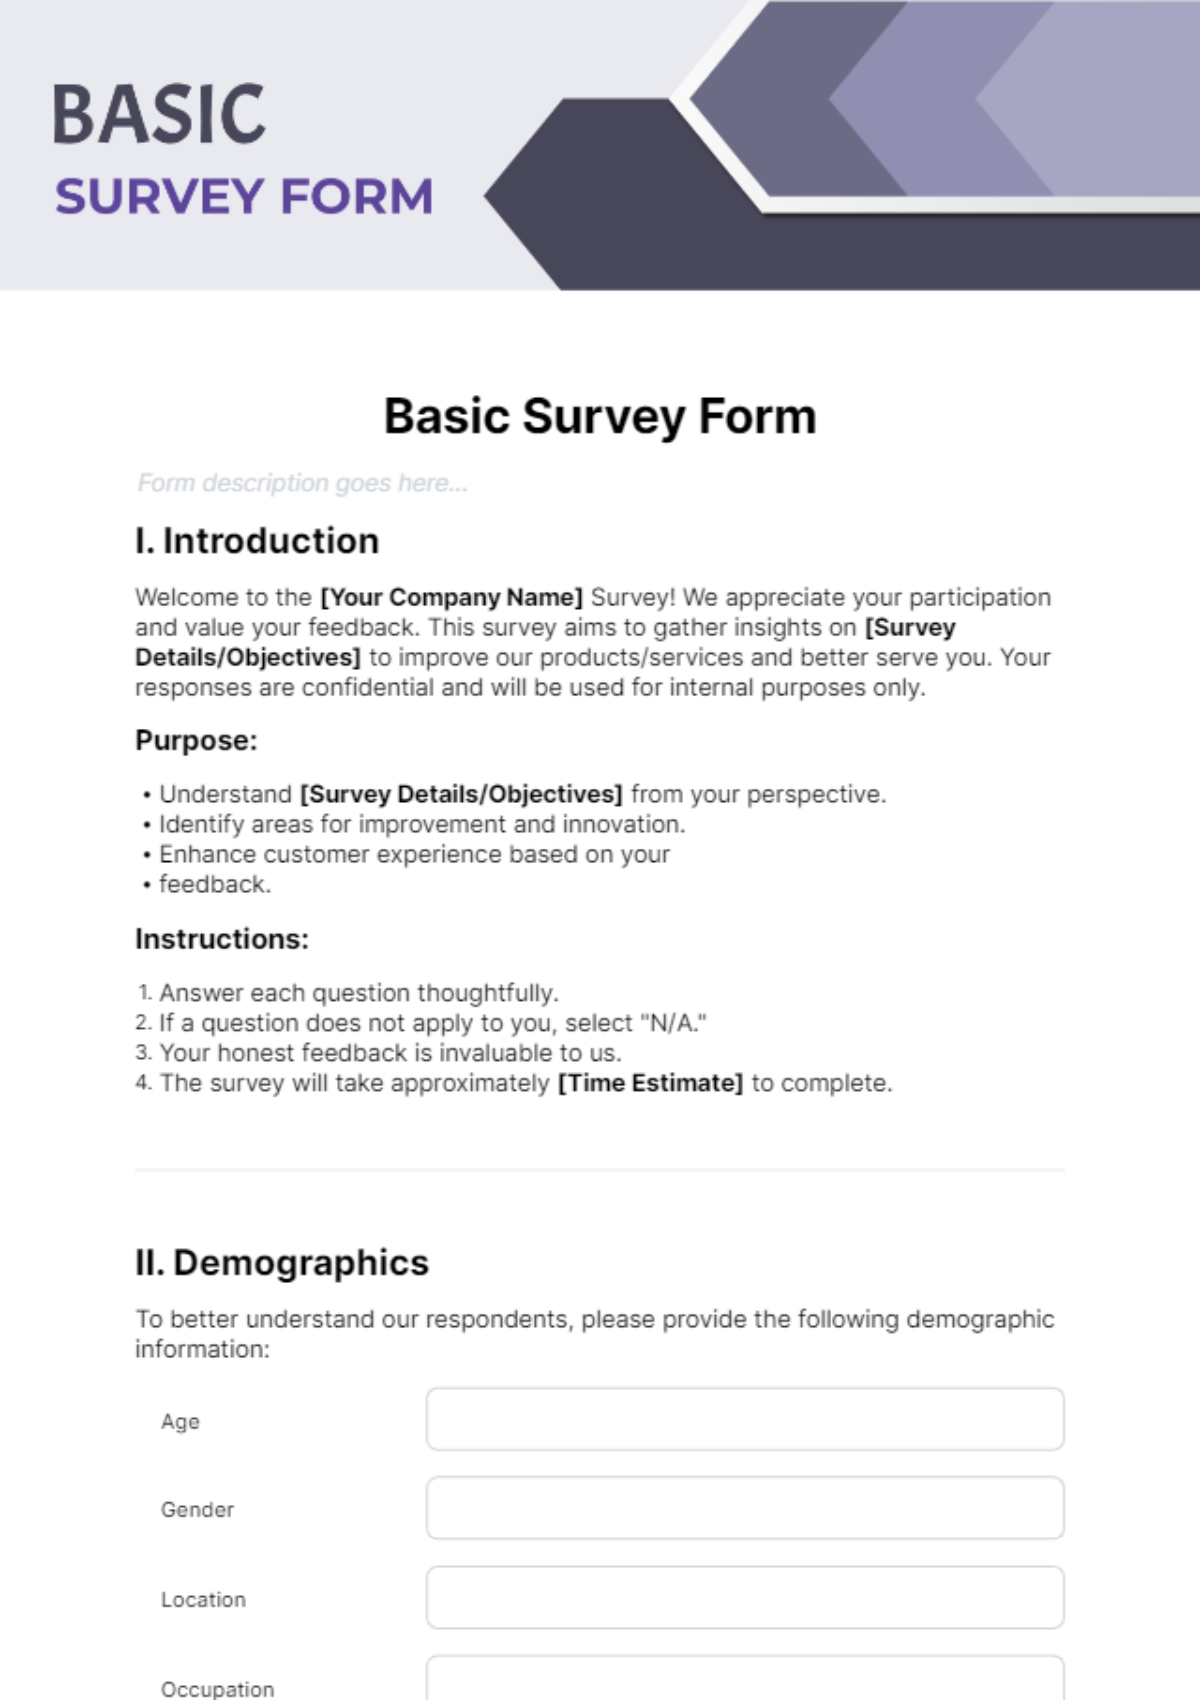 Basic Survey Form Template